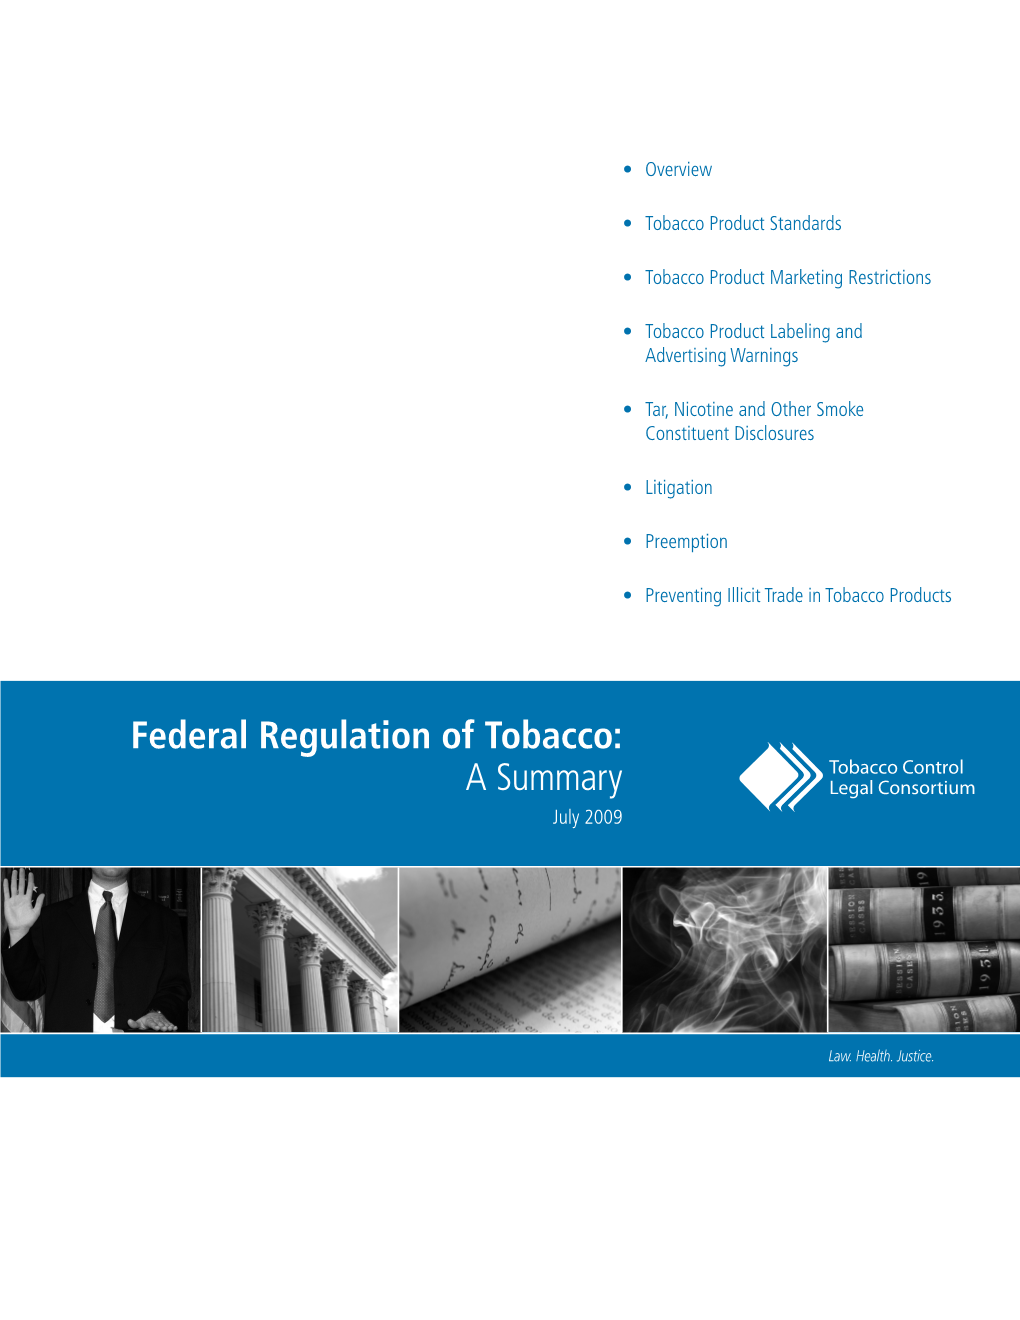 Federal Regulation of Tobacco: a Summary